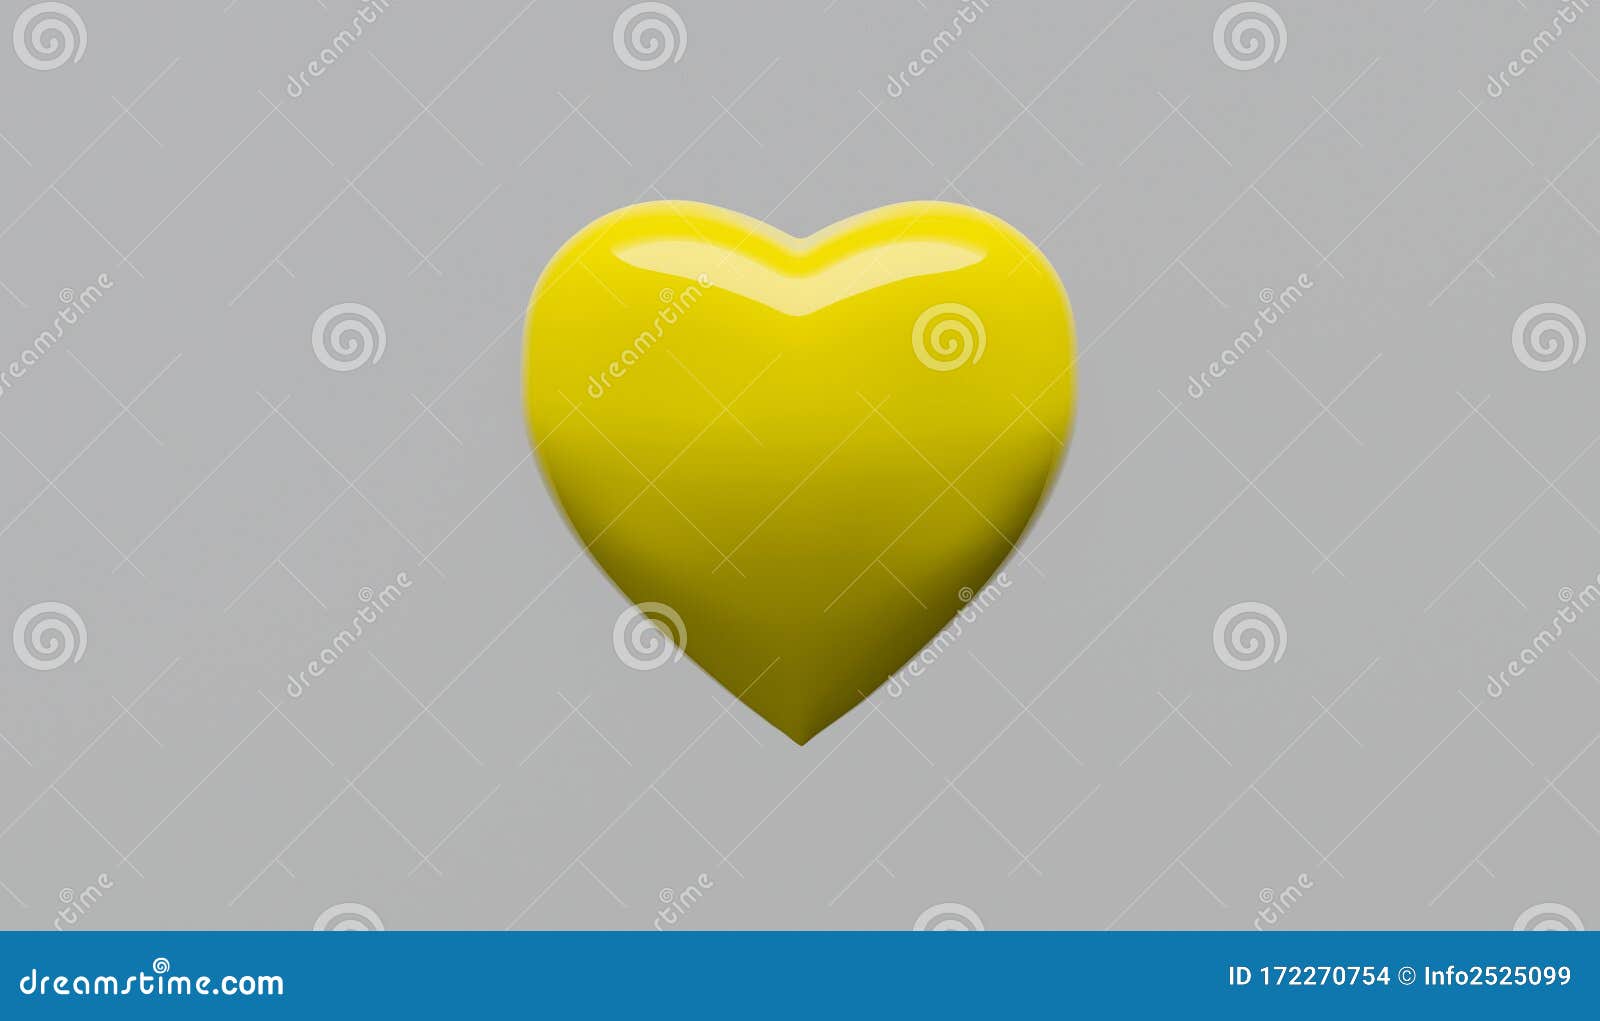 yellow heart on white background valentine`s day